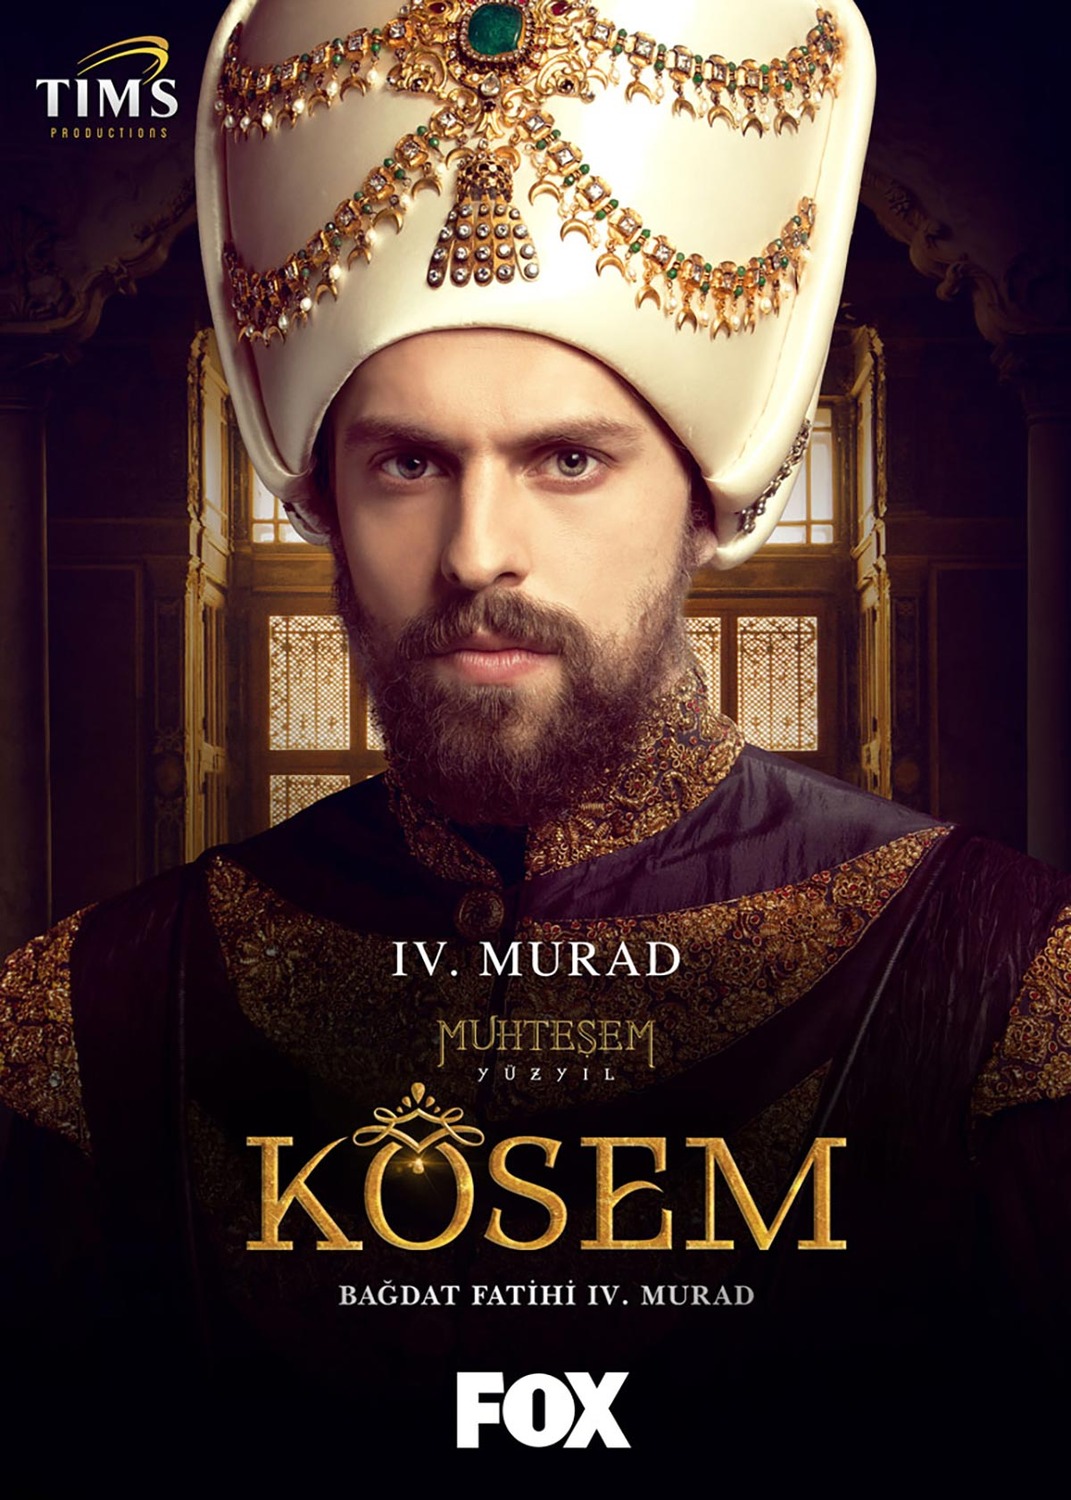 Extra Large TV Poster Image for Muhtesem Yüzyil: Kösem (#10 of 10)